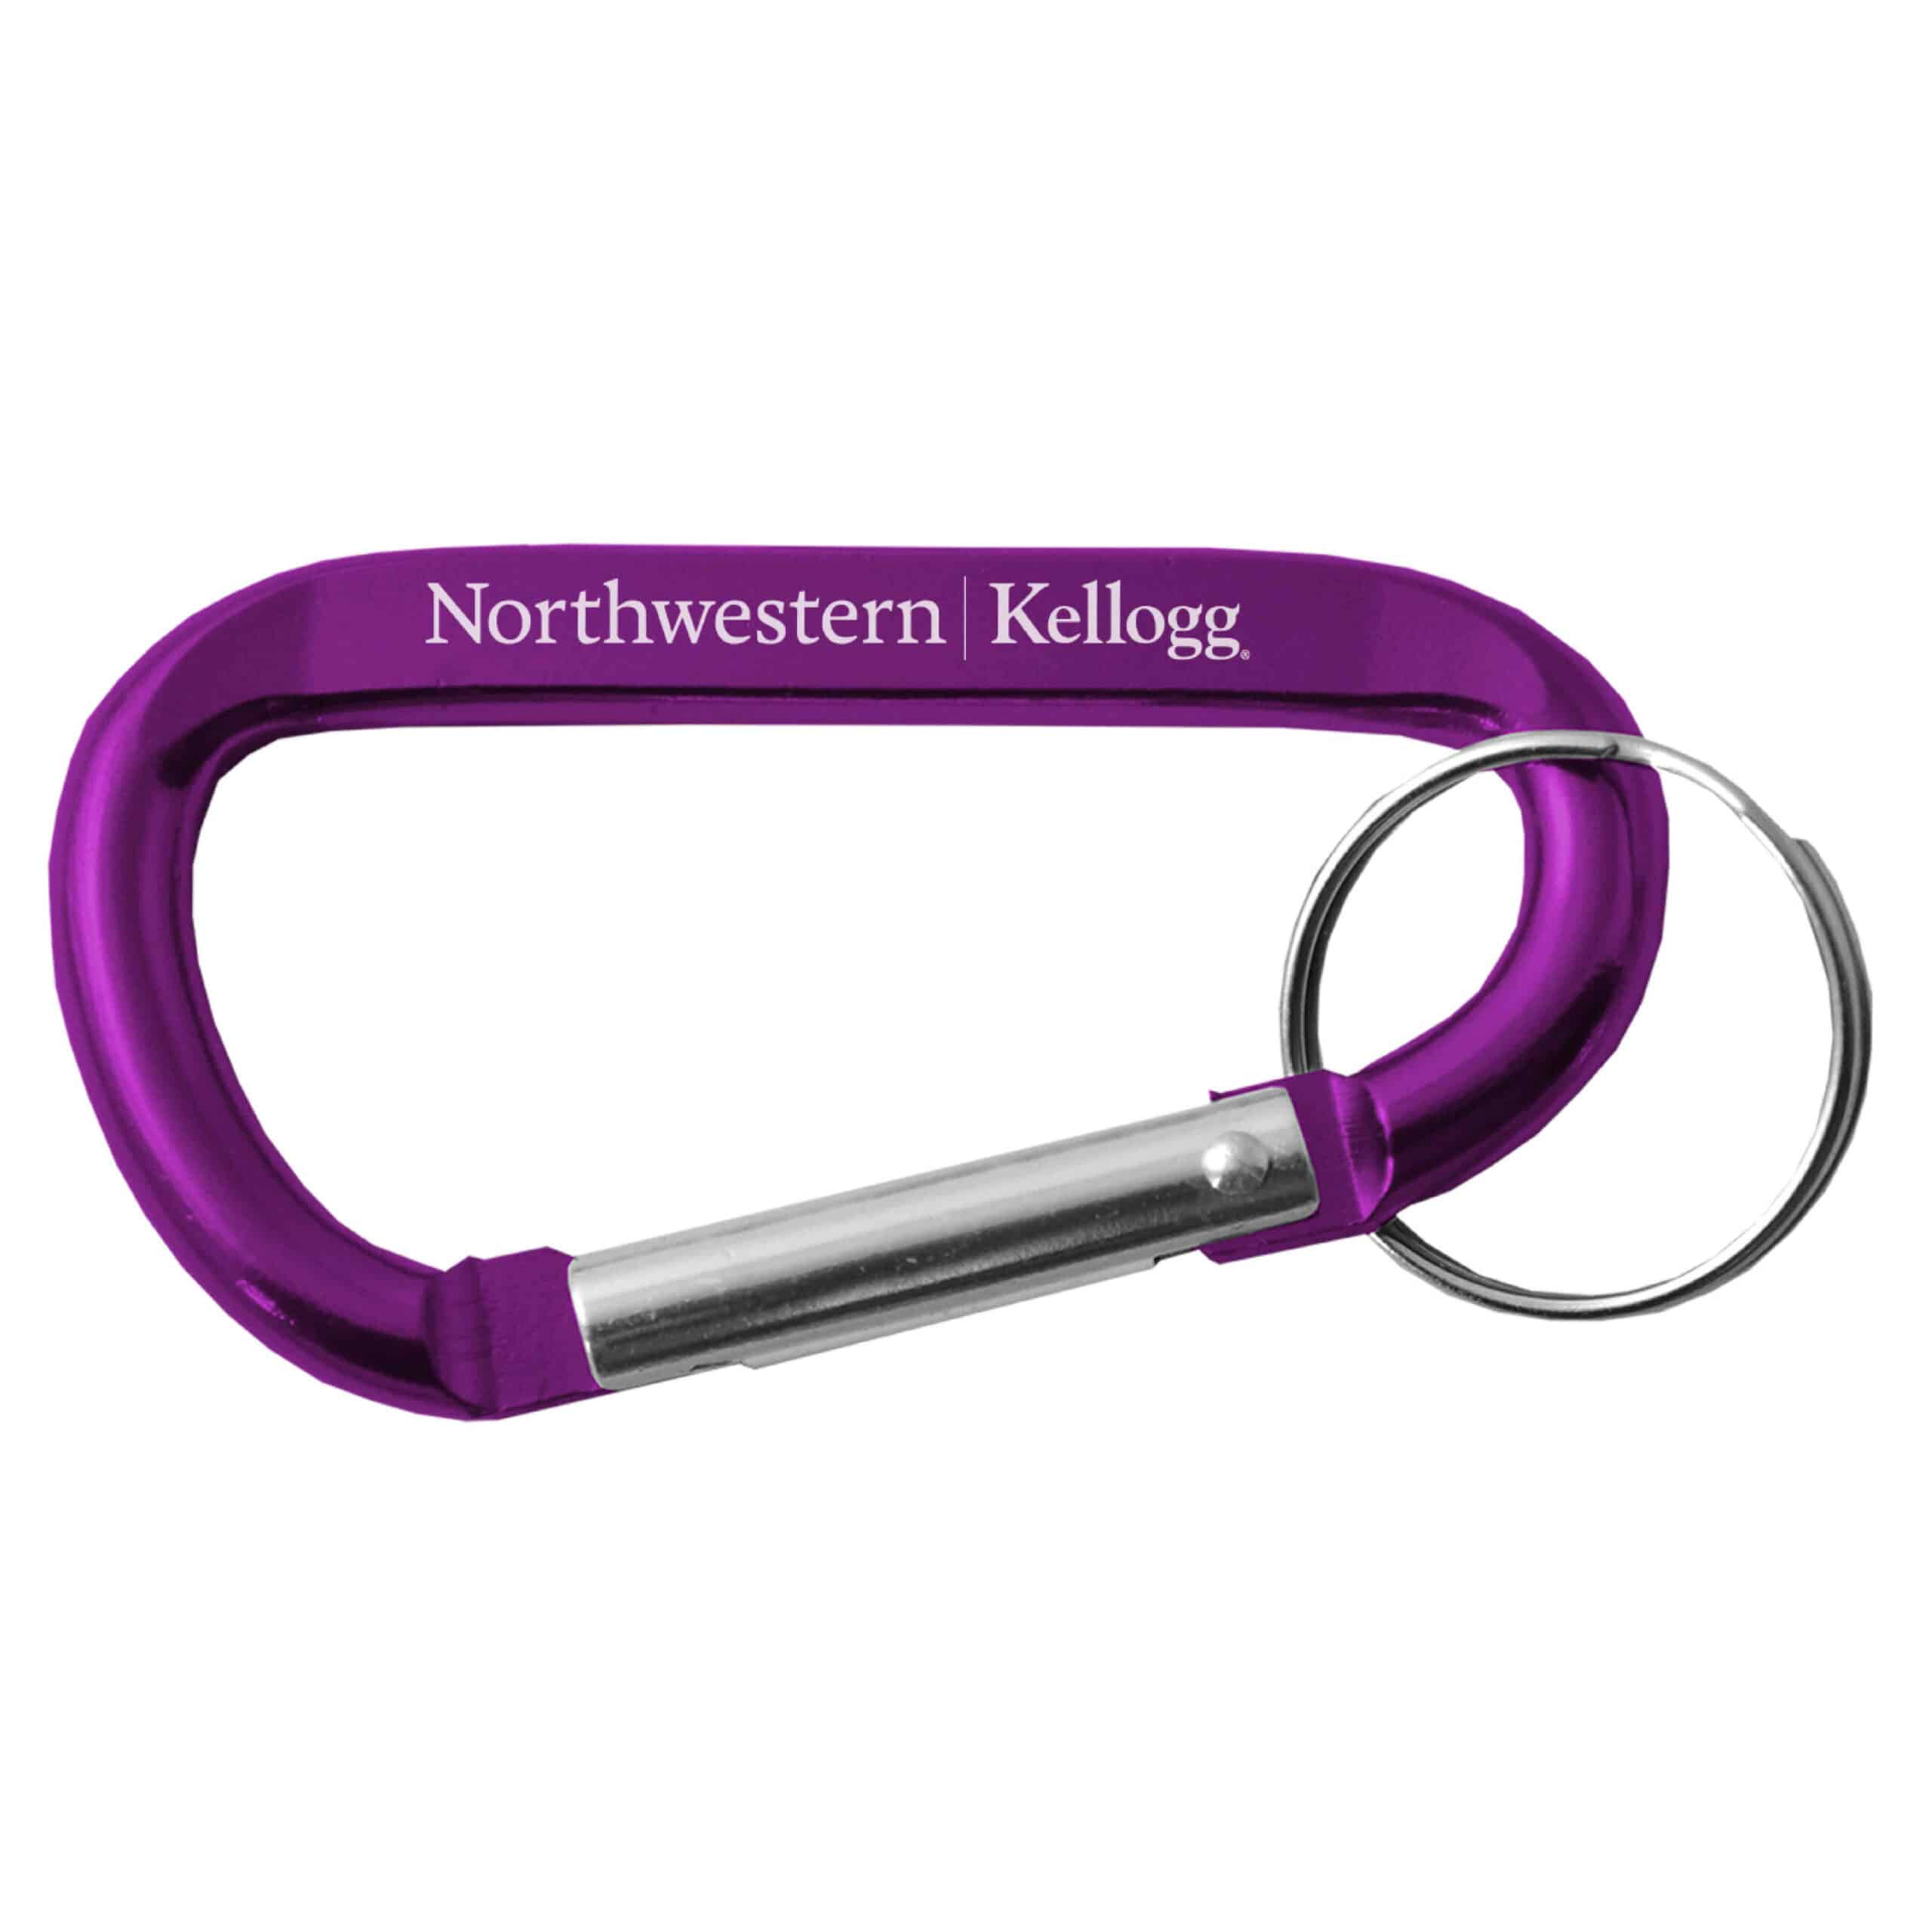 Northwestern University Wildcats Laser Engraved Purple Carabiner Key Chain with Kellogg Design